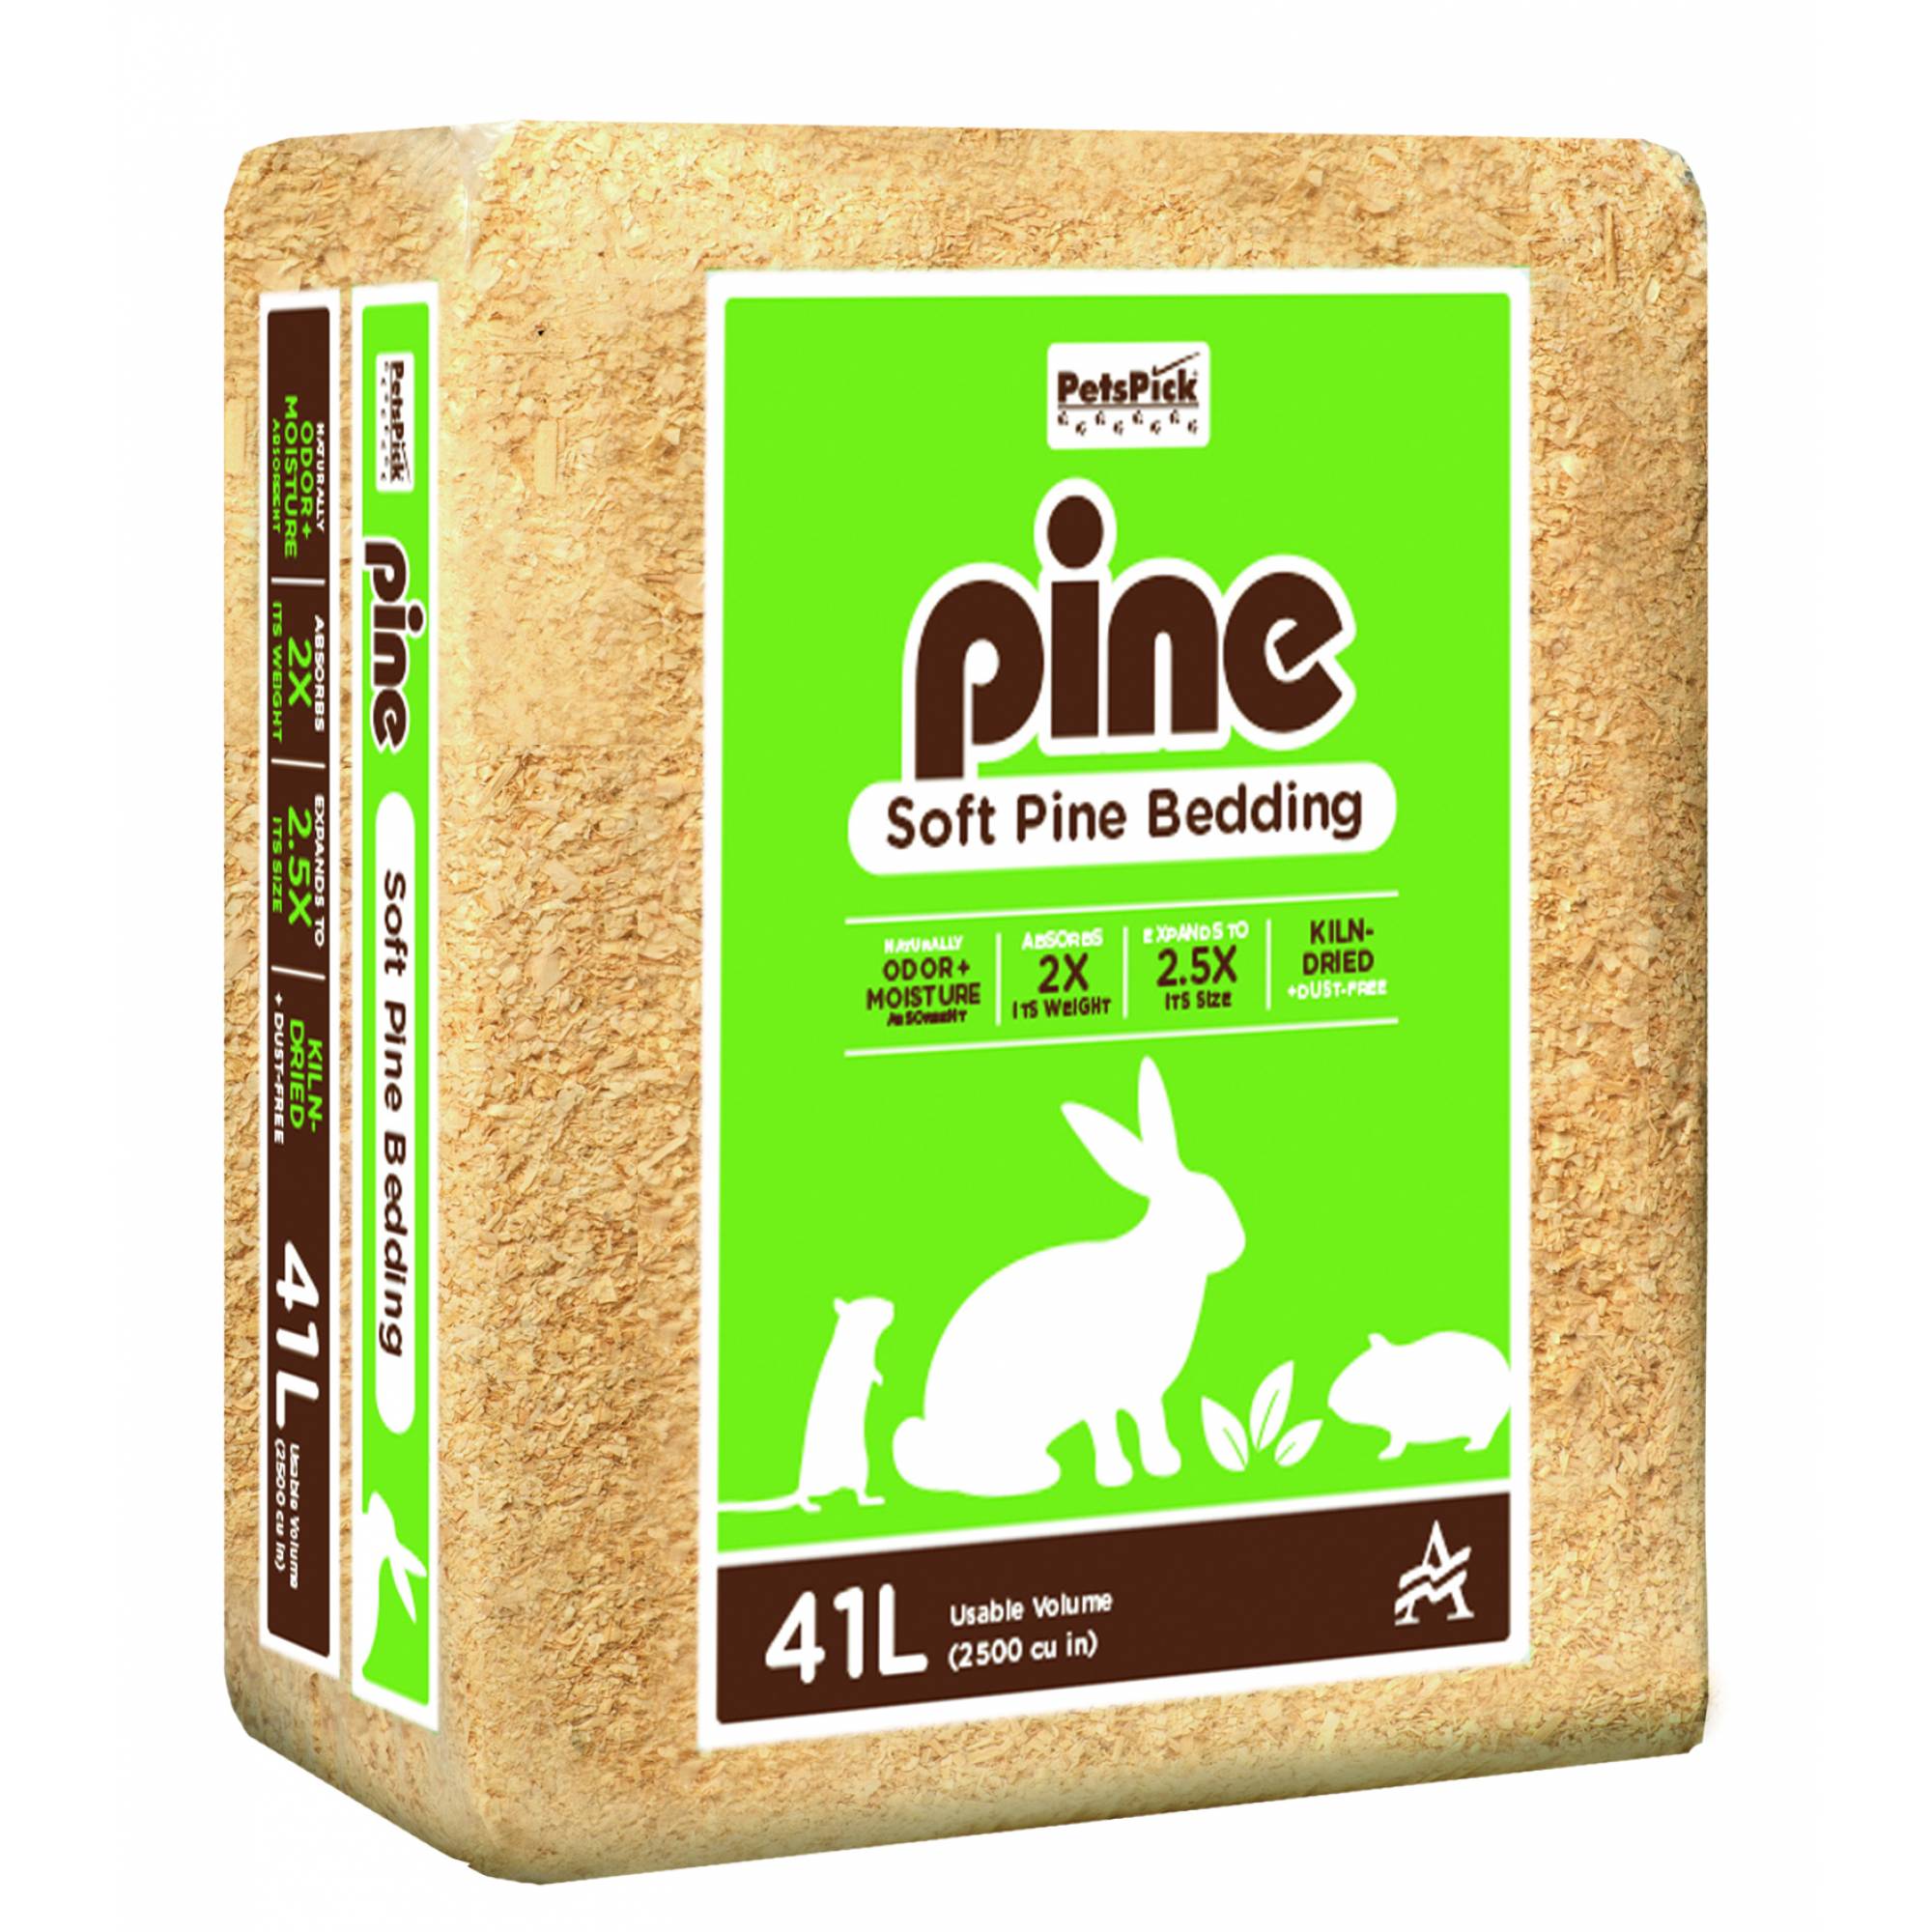 PetsPick - Pine Bedding 41L